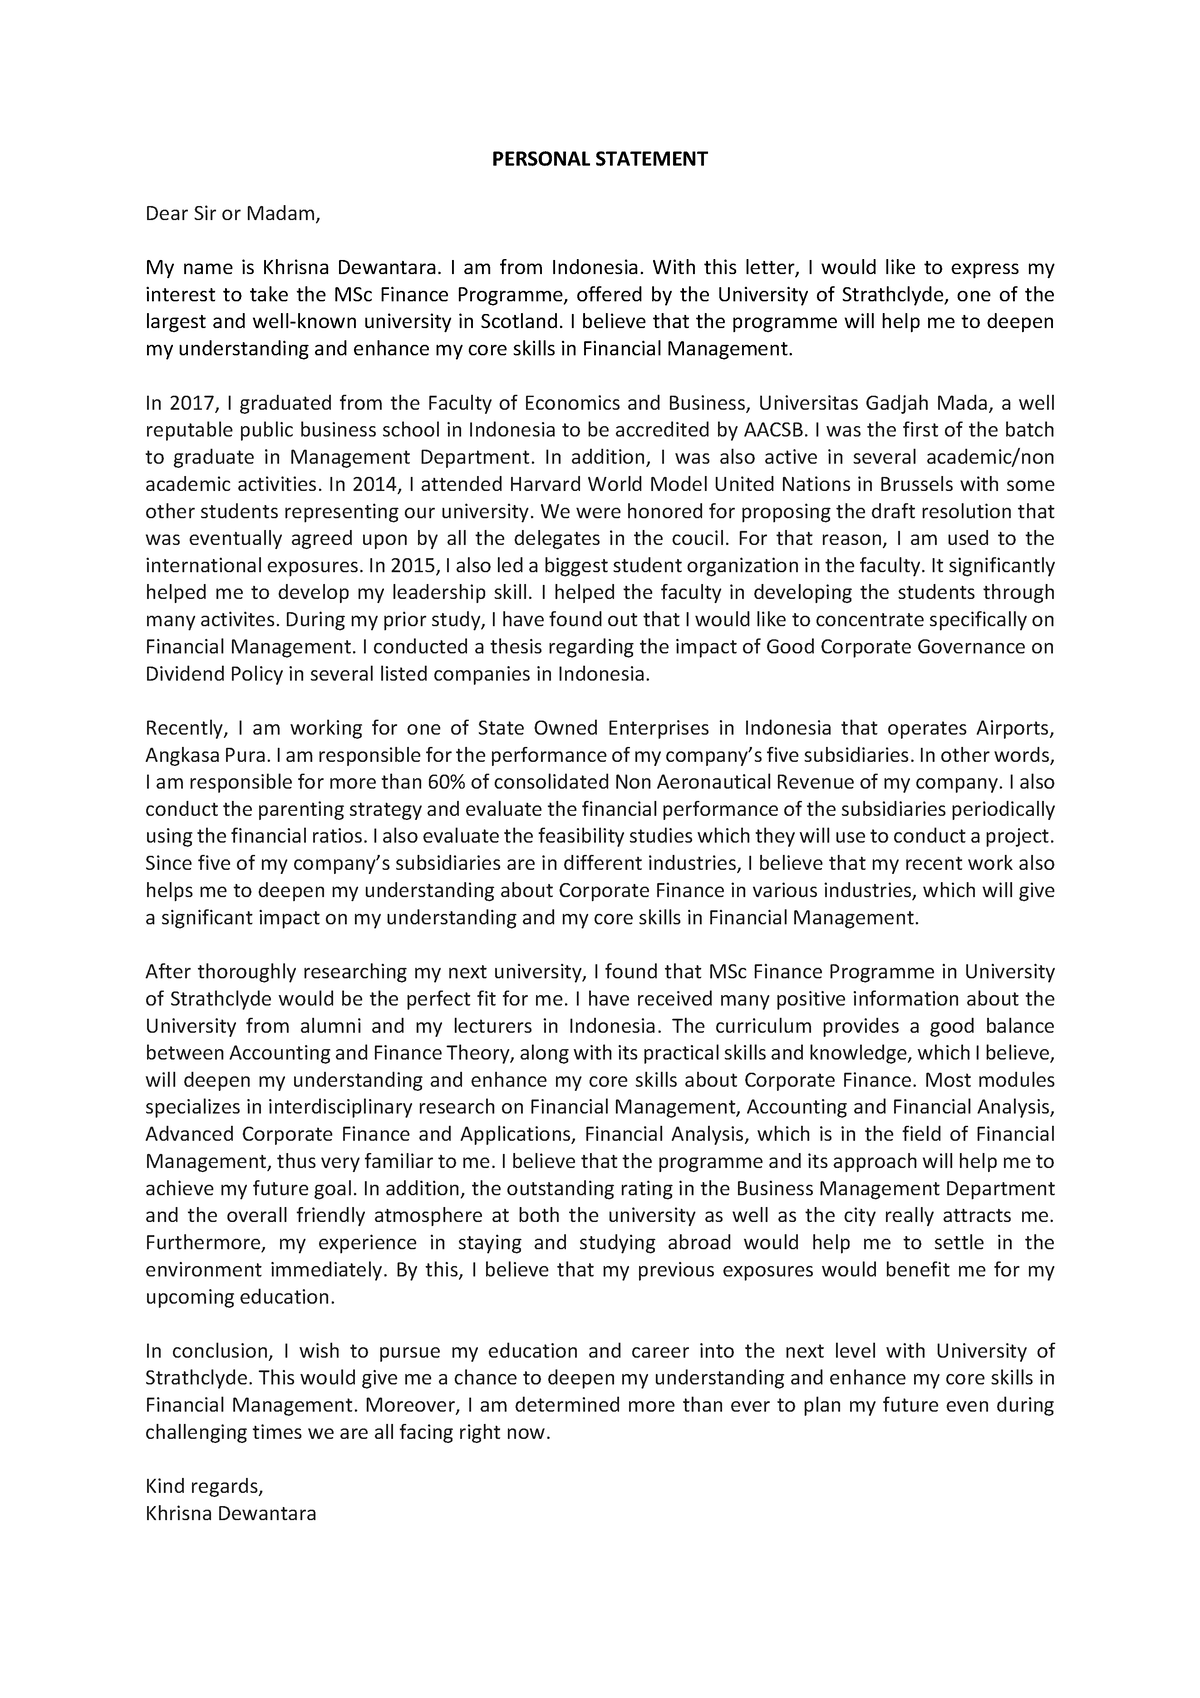 glasgow university postgraduate personal statement